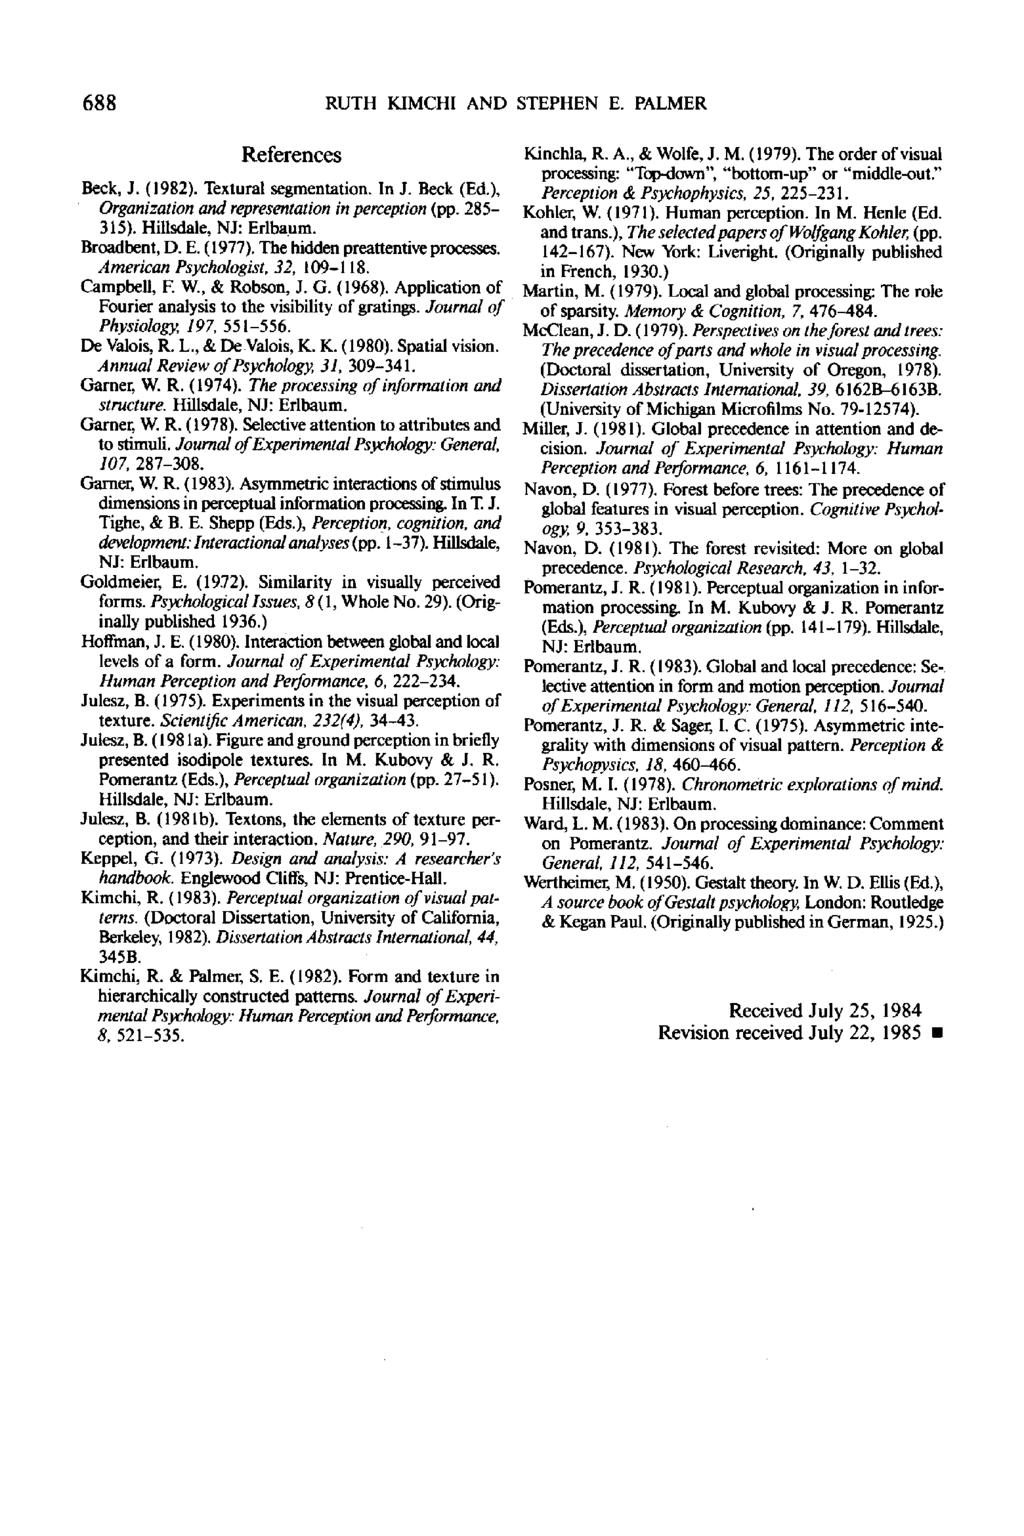 688 RUTH KIMCHI AND STEPHEN E. PALMER References Beck, J. (1982). Textural segmentation. In J. Beck (Ed.), Organization and representation in perception (pp. 285-315). HiUsdale, N J: Edbaum.